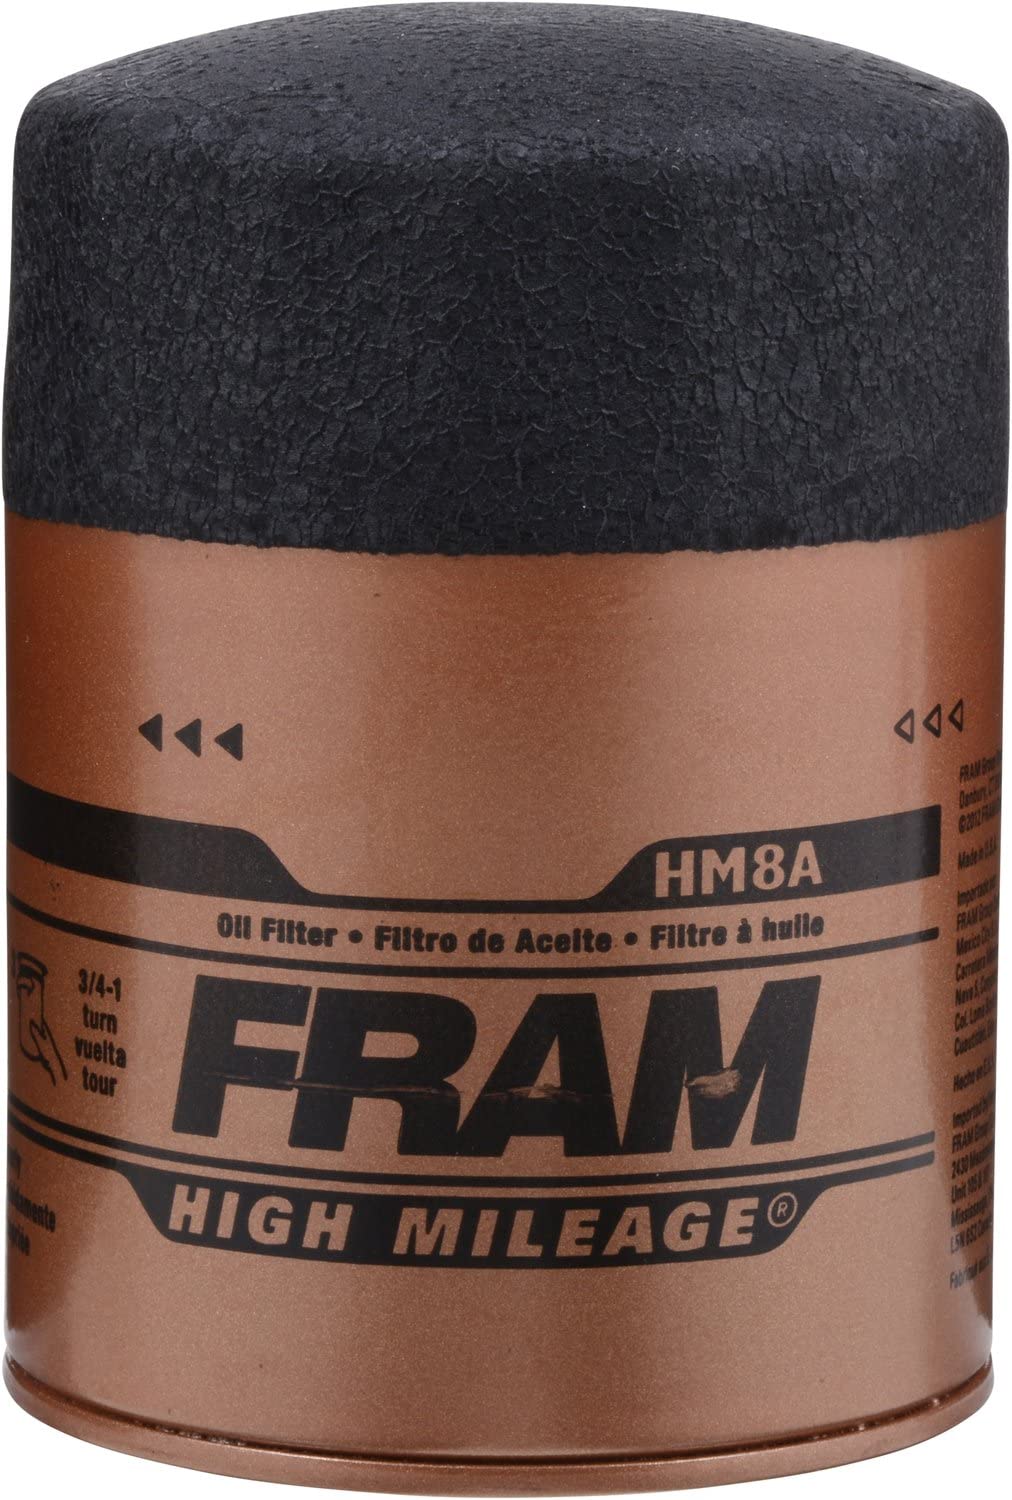 FRAM HM8A High Mileage Oil Filter